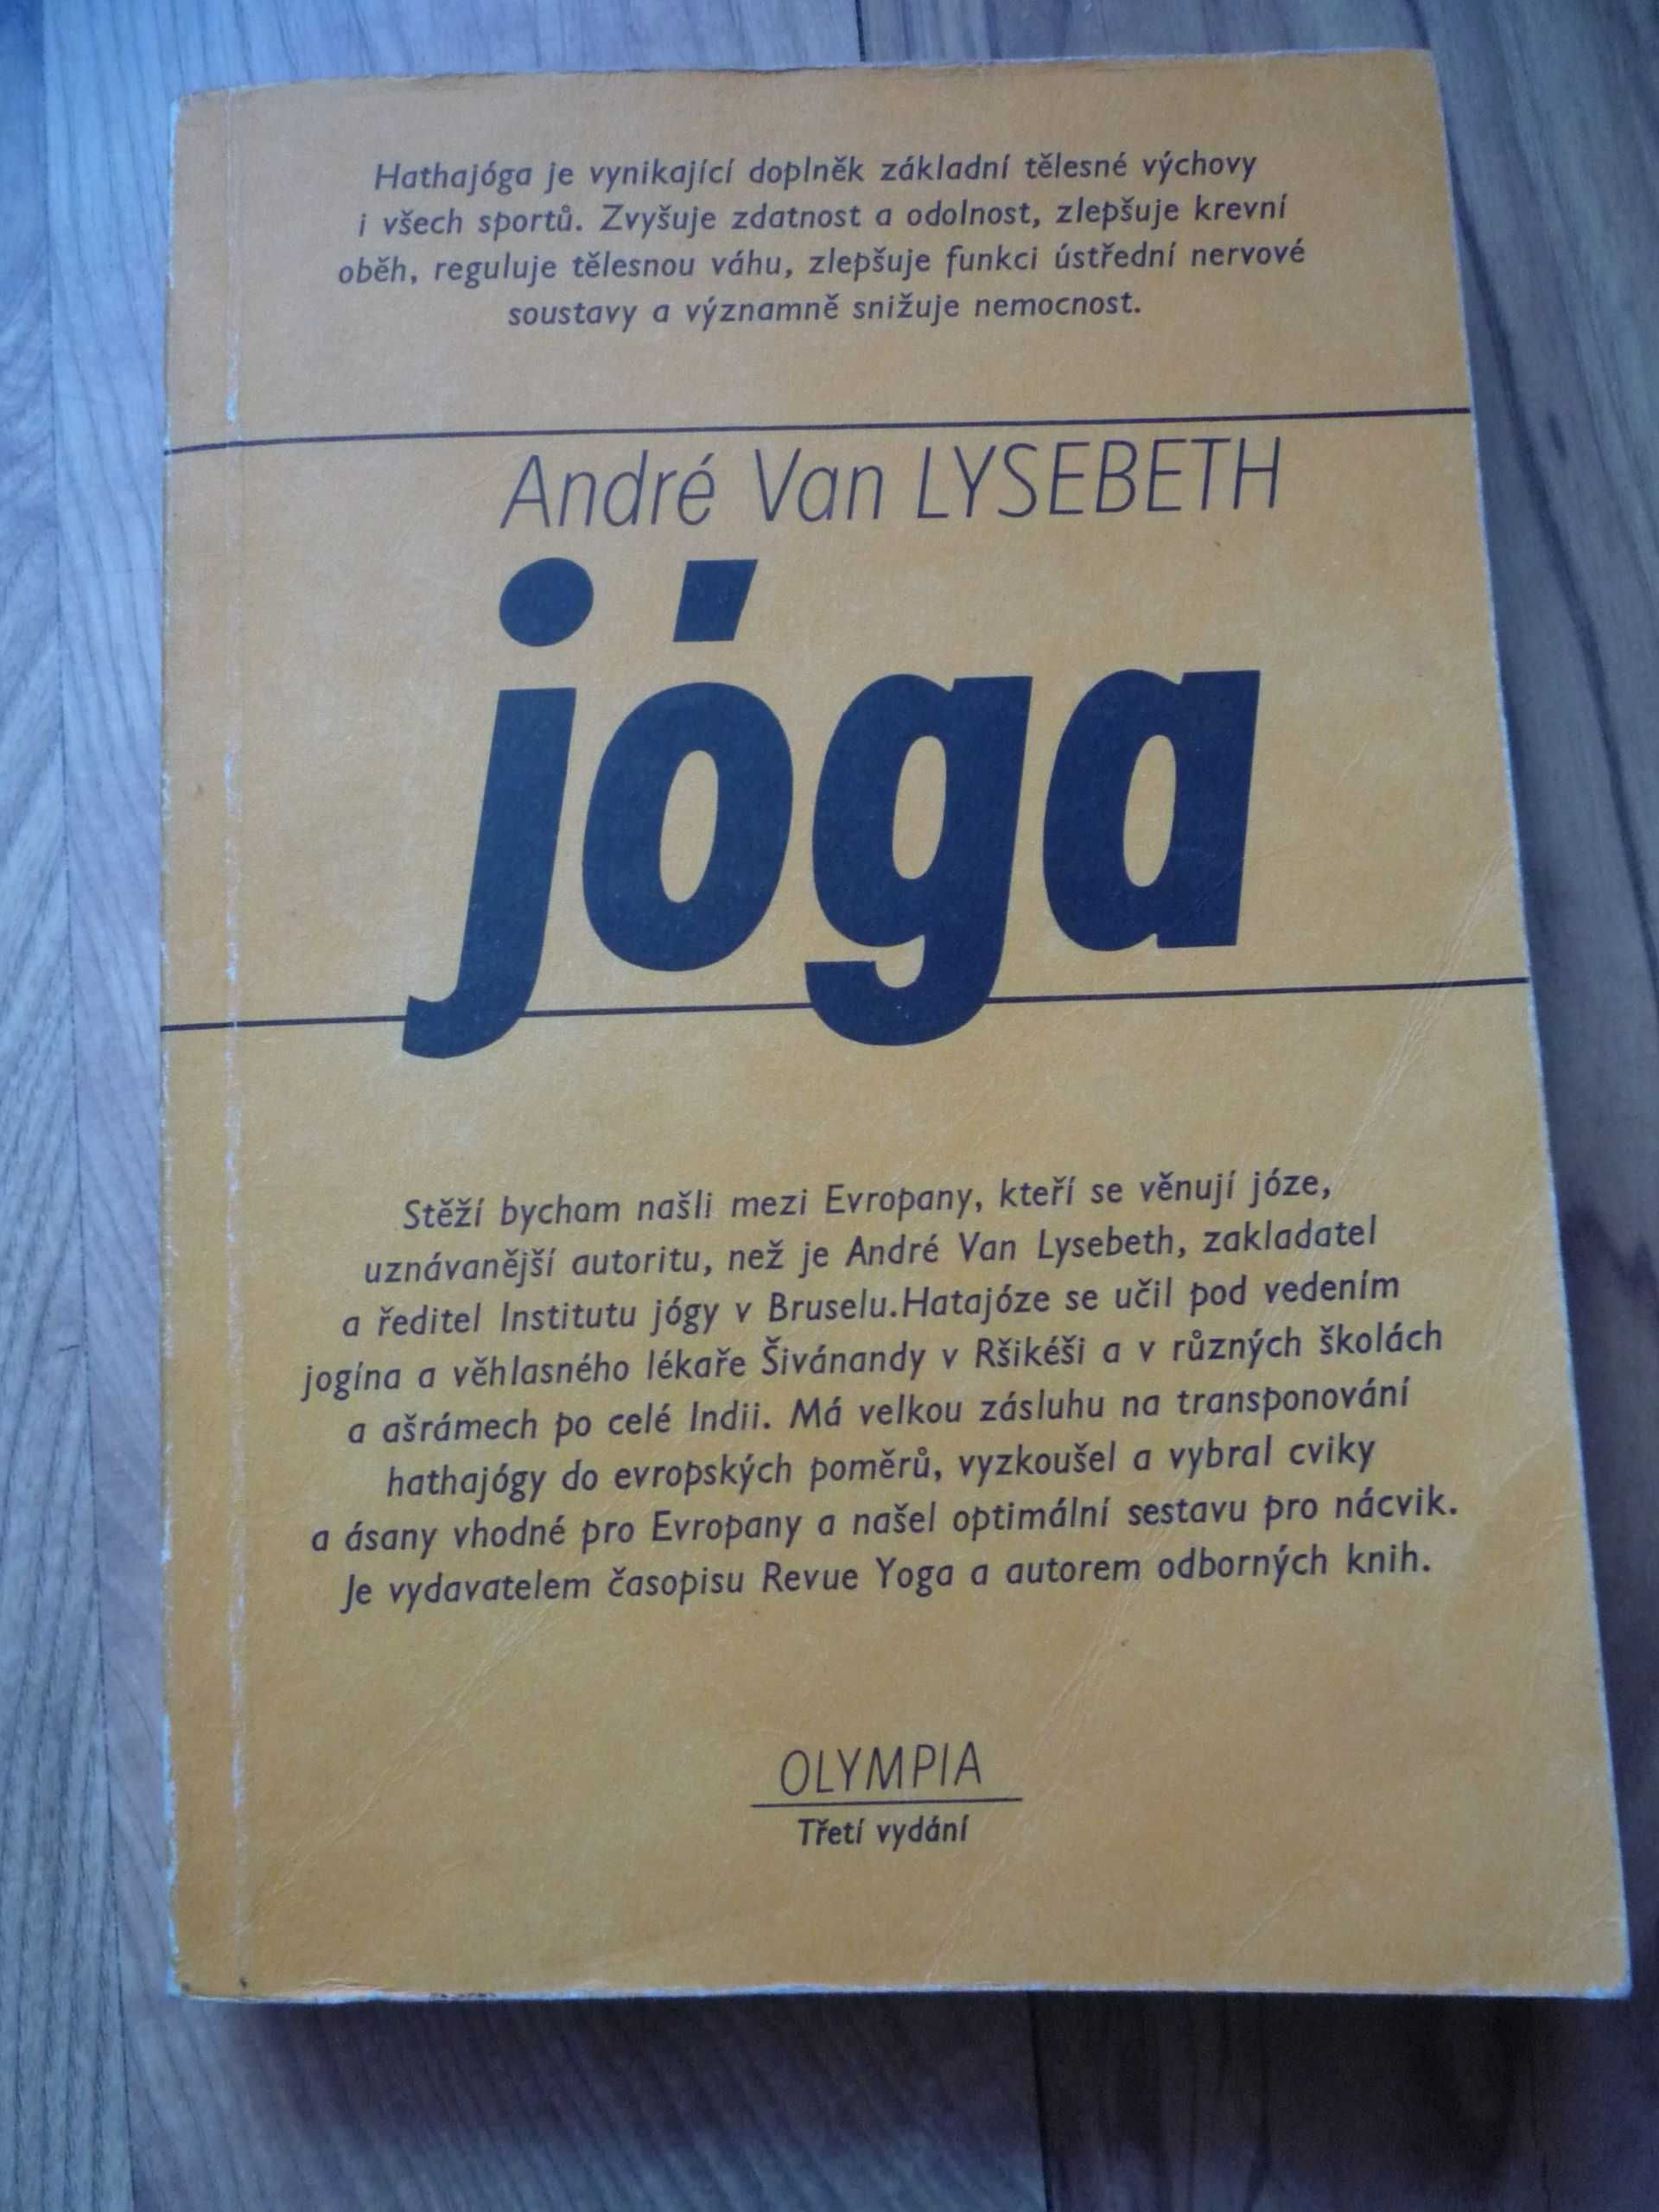 Andre van Lysebeth "Joga"